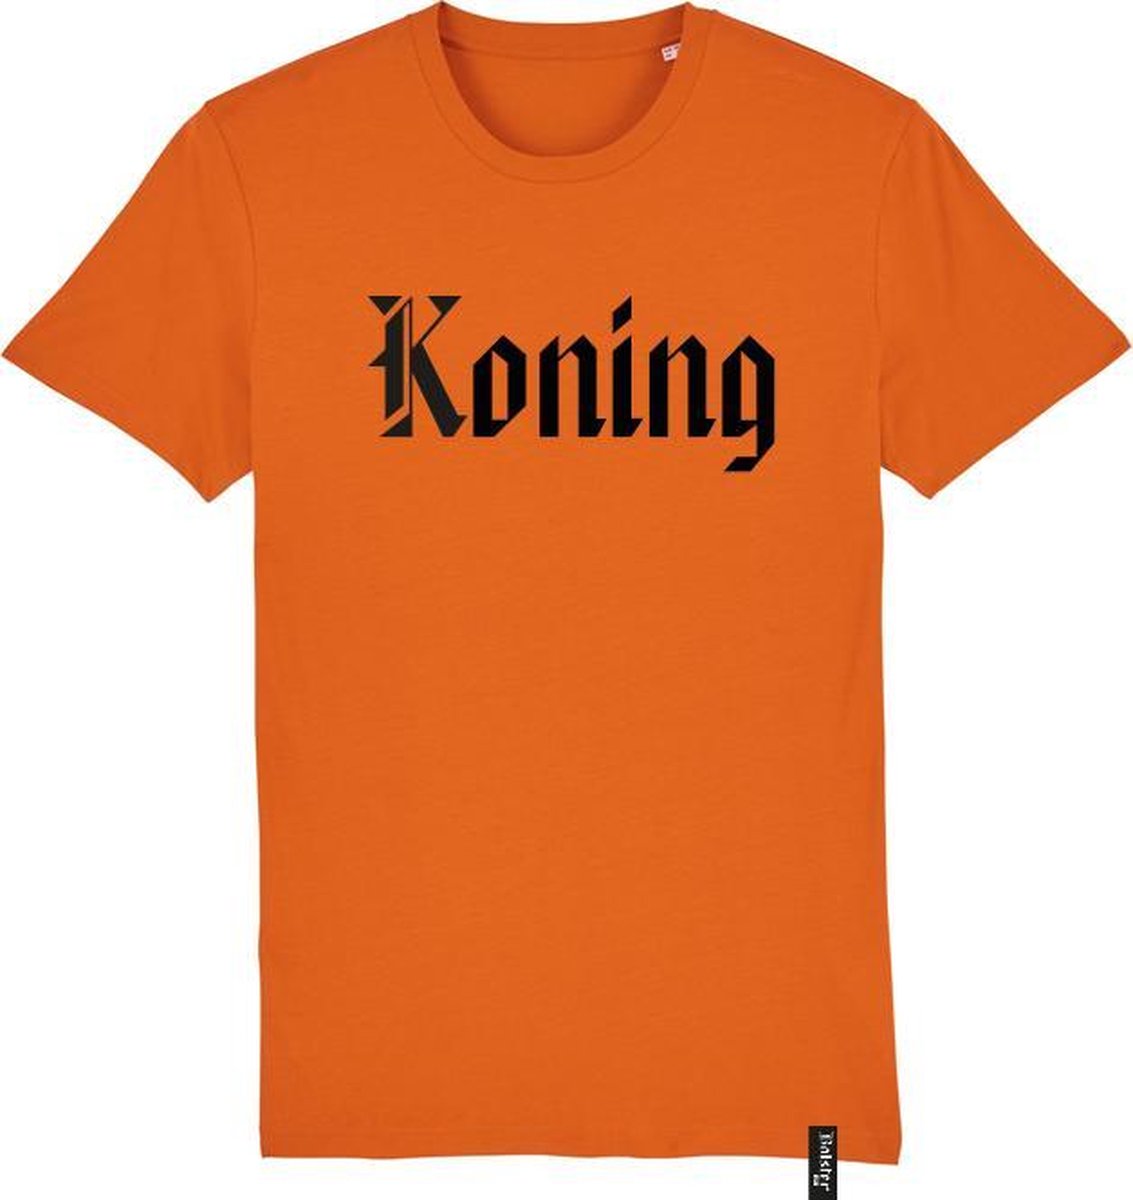 T-shirt | Bolster#0049 - Koning| Maat: M